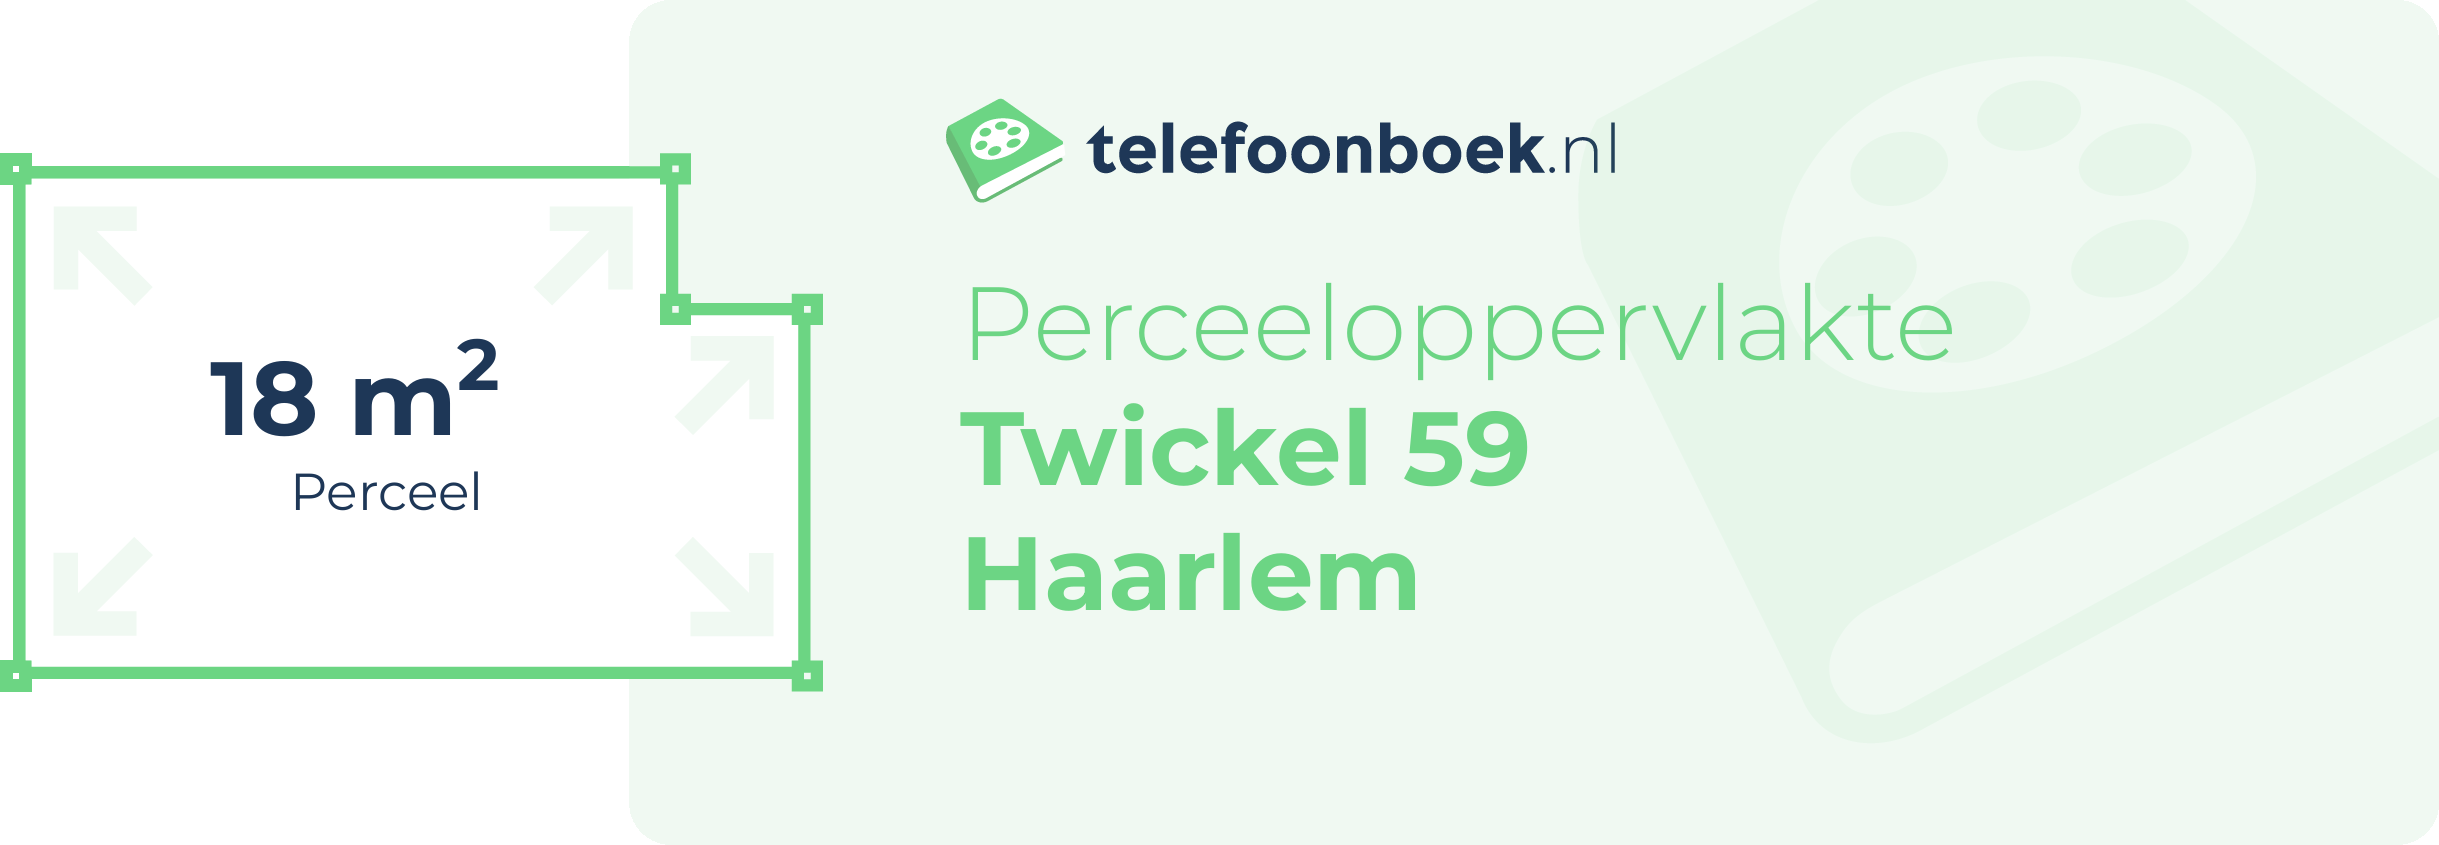 Perceeloppervlakte Twickel 59 Haarlem